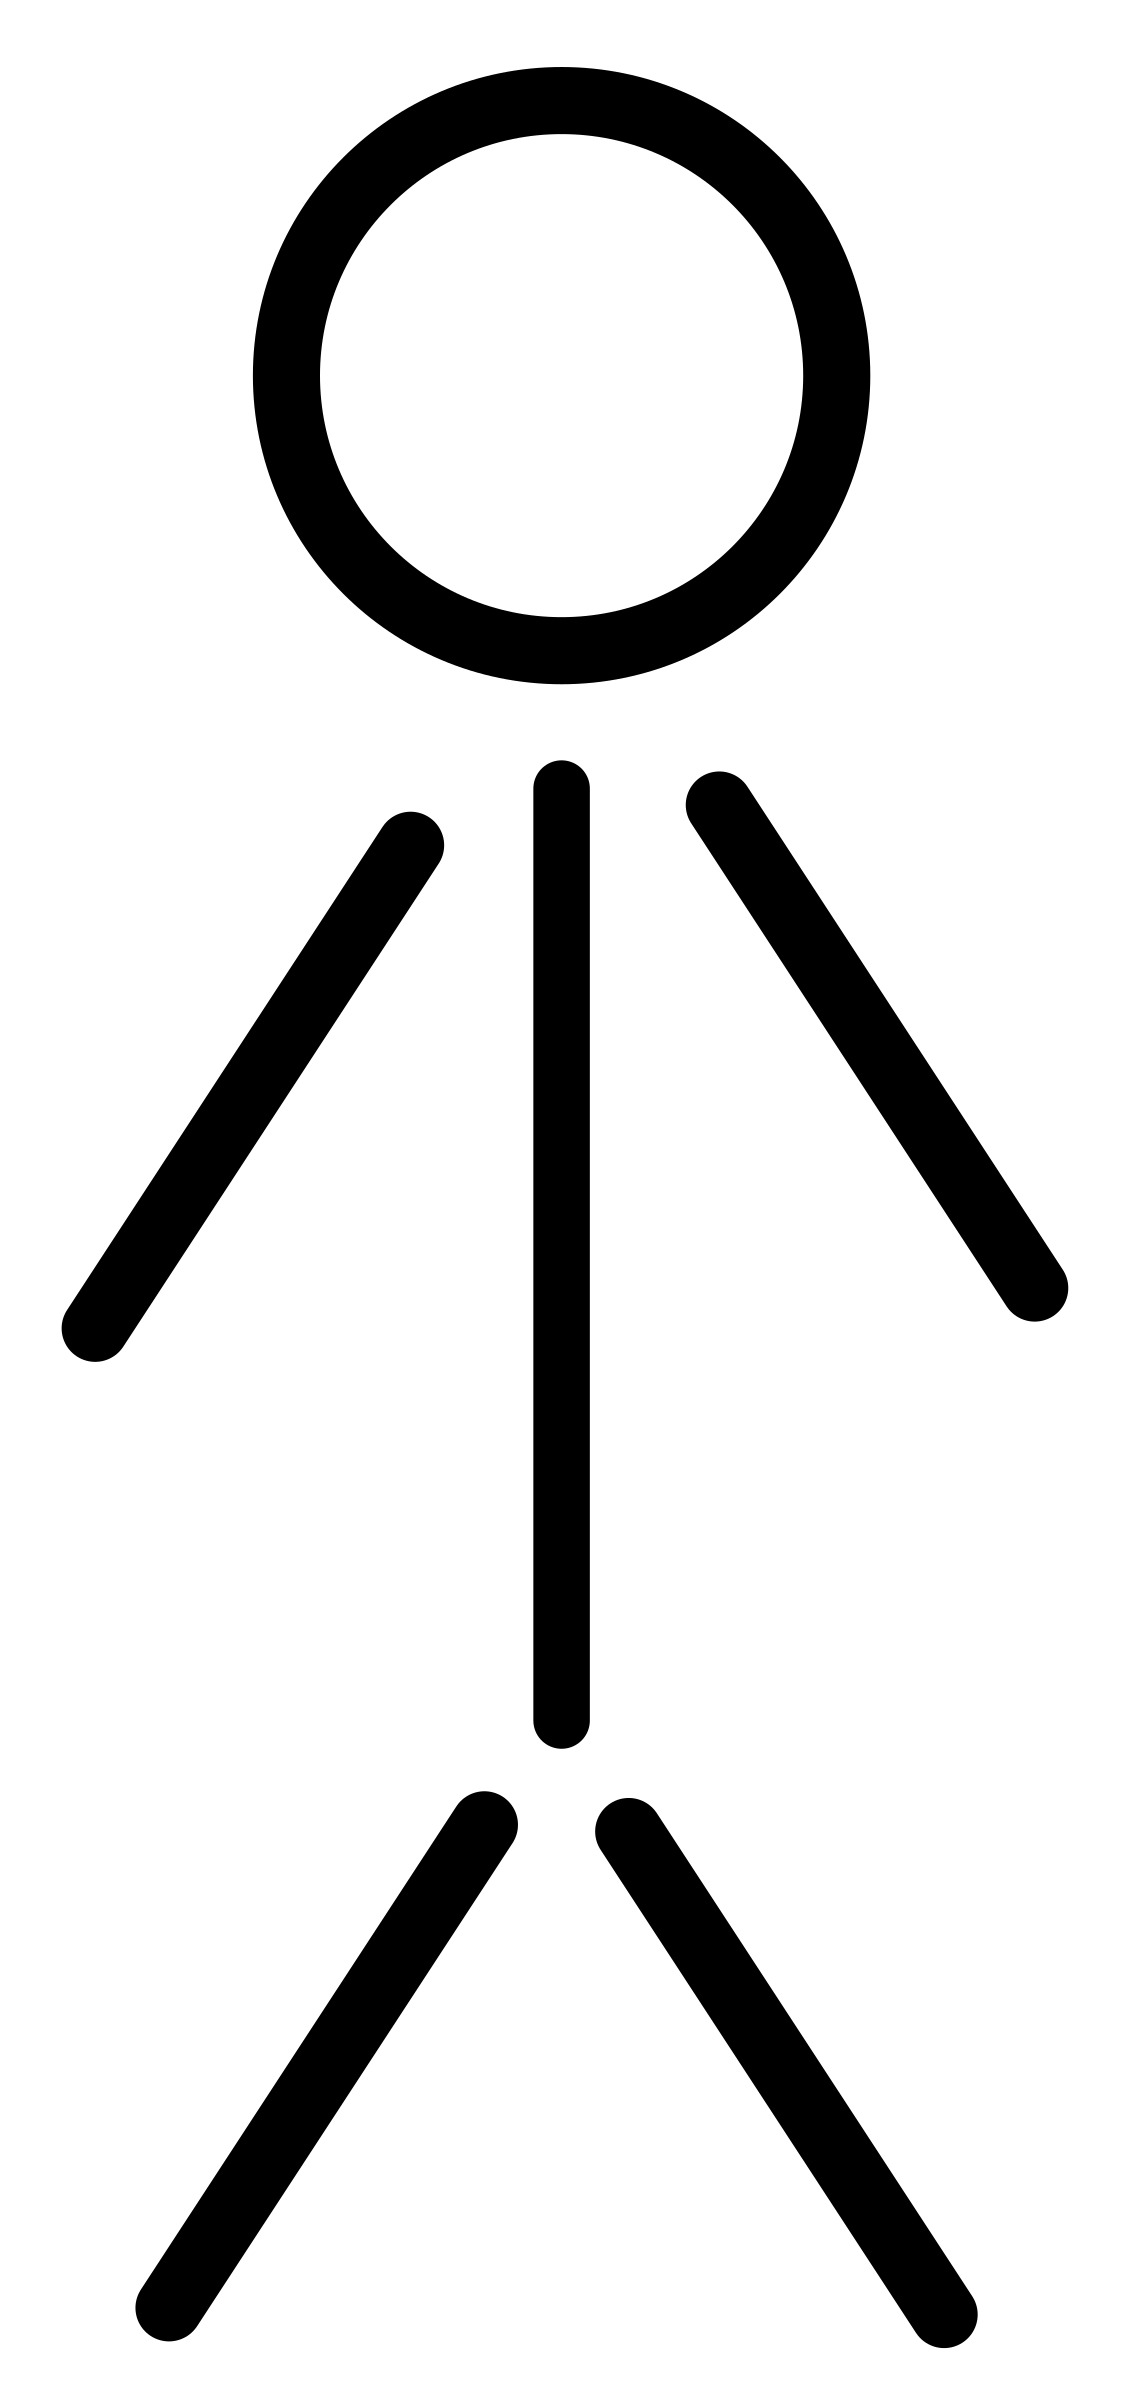 Simple Stick Figure icons